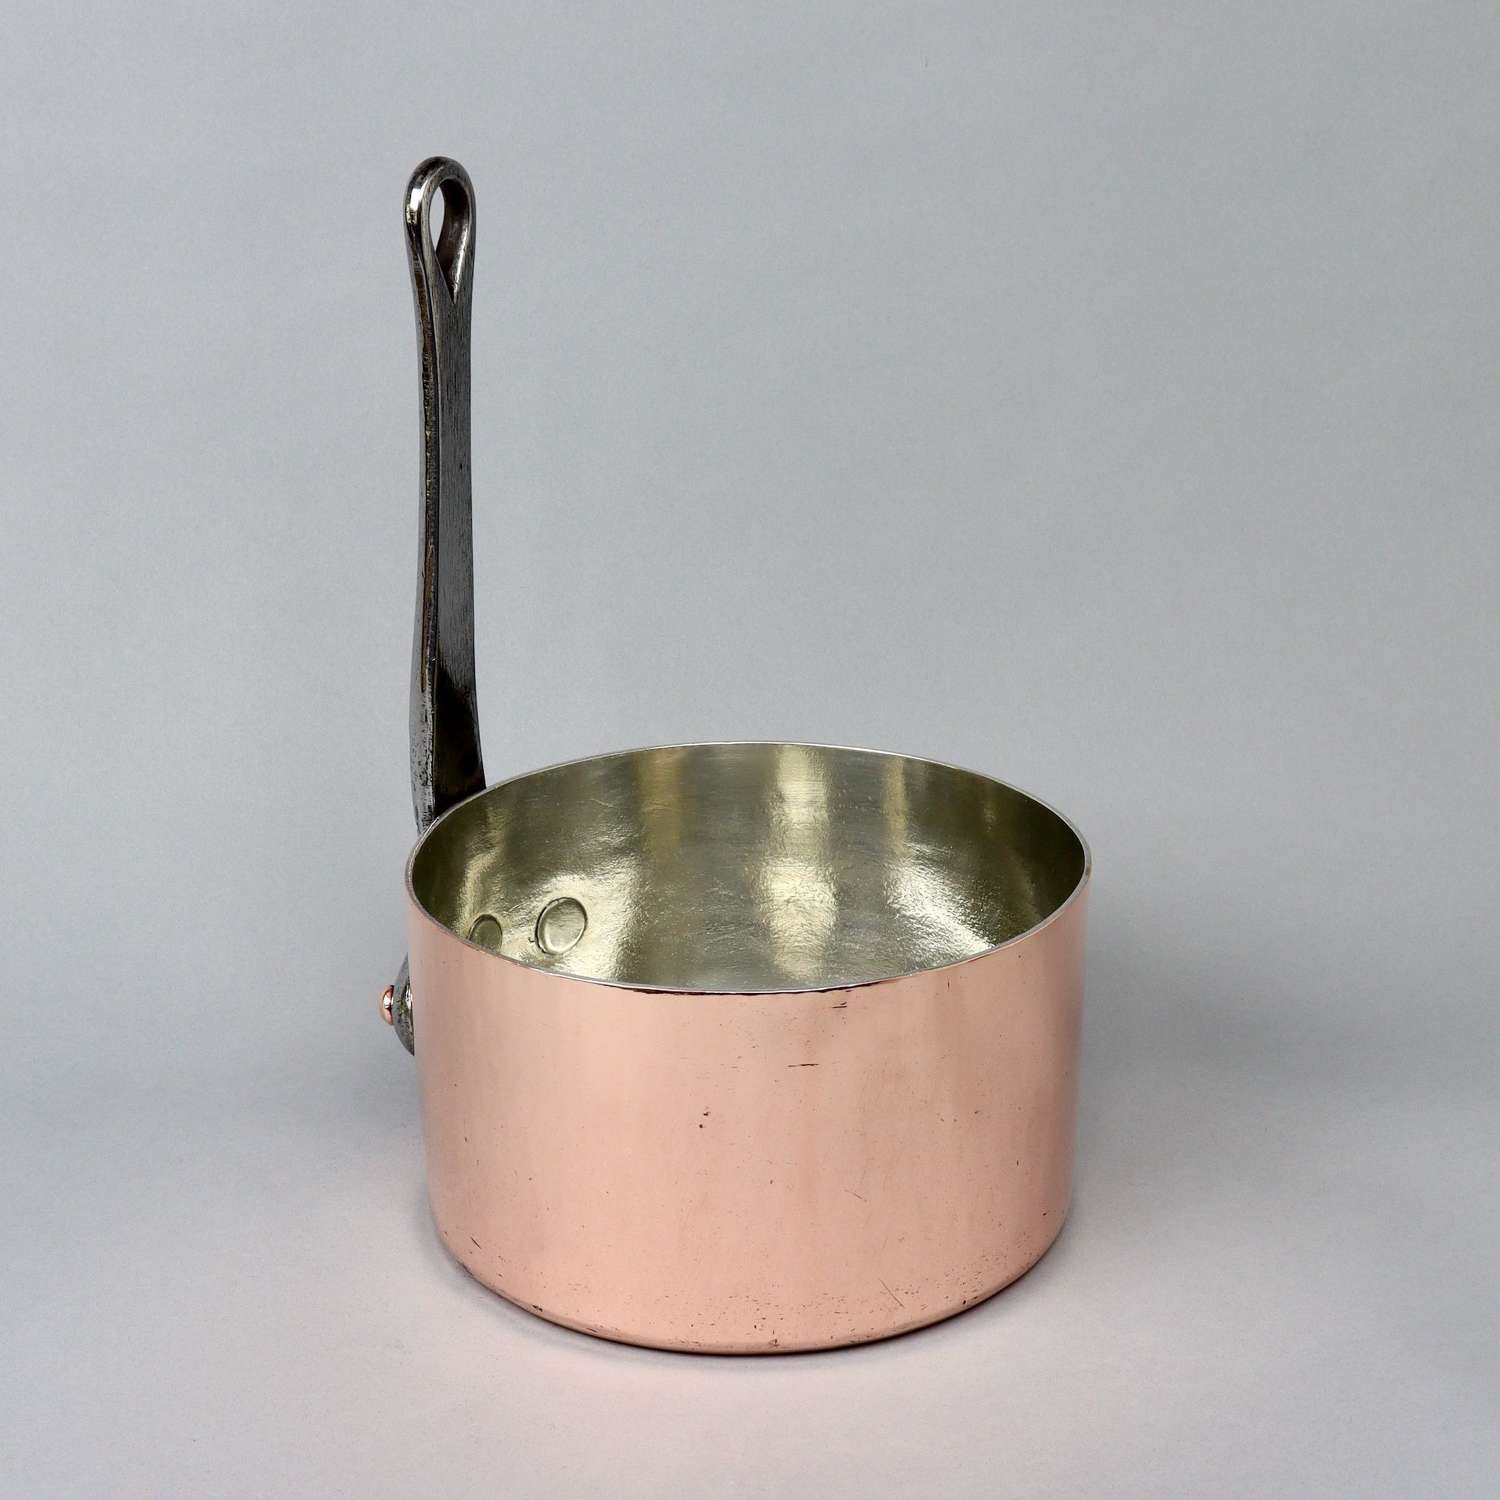 Unusual Pan with Vertical Handle